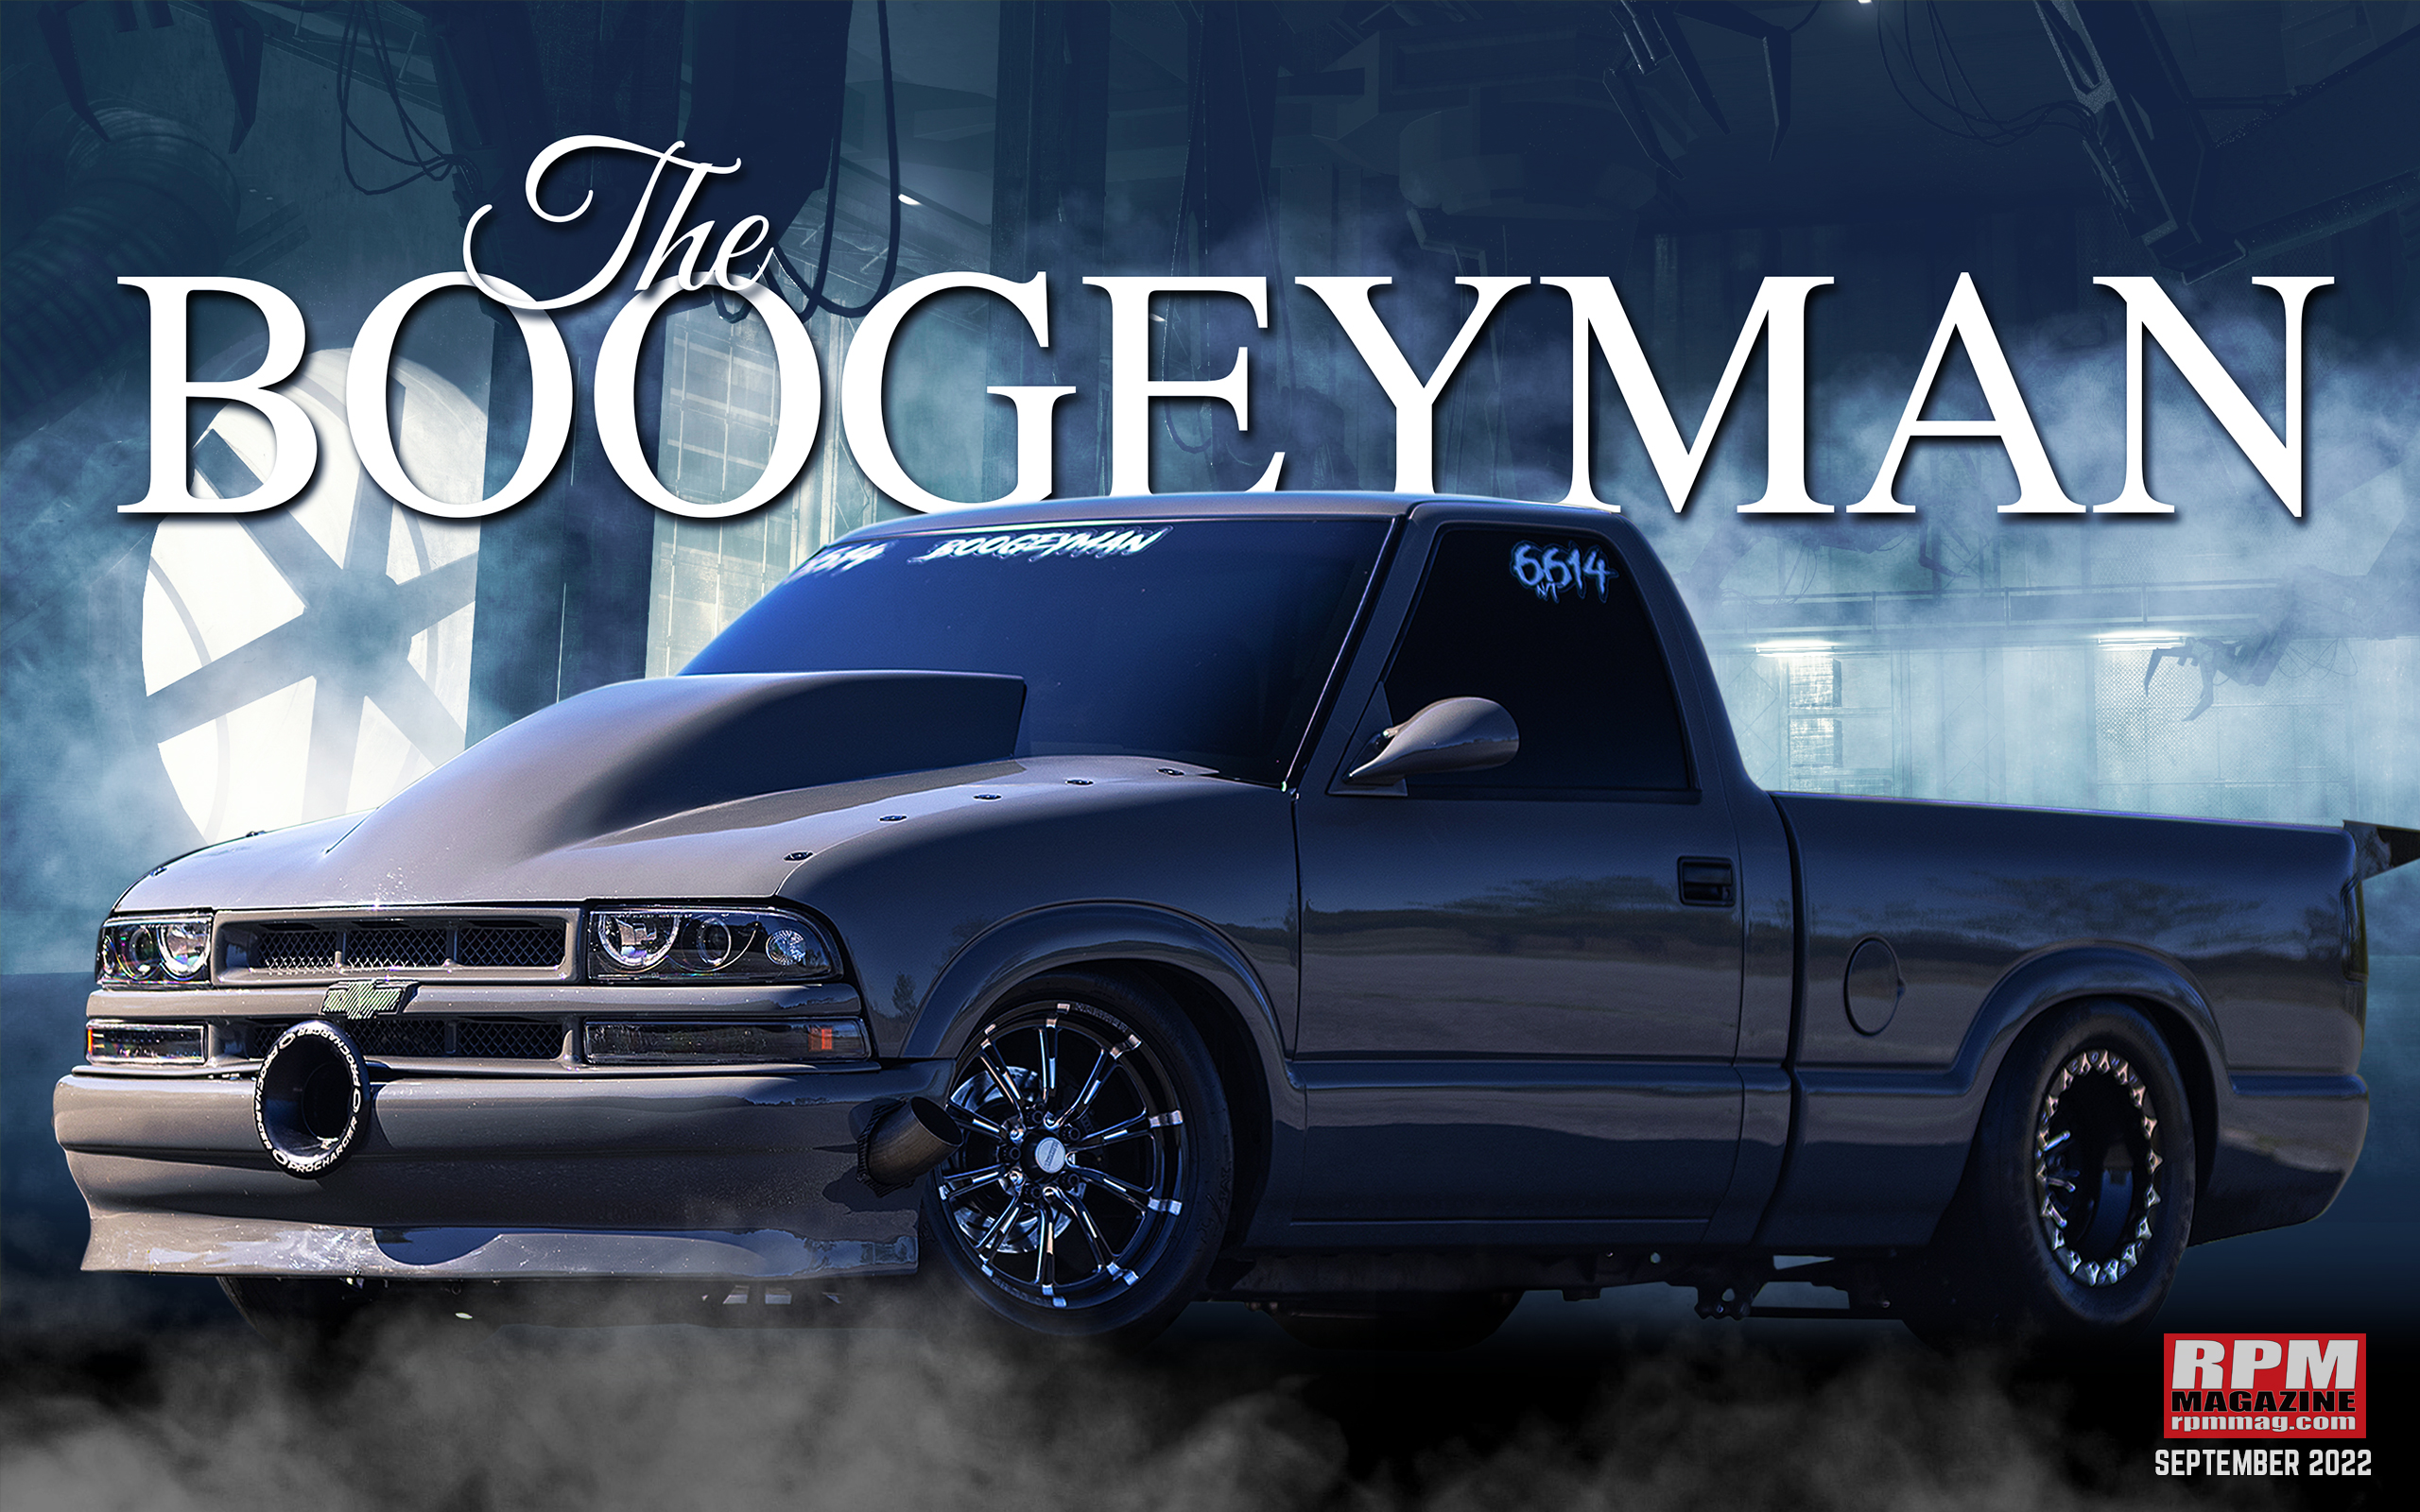 The Boogeyman Truck